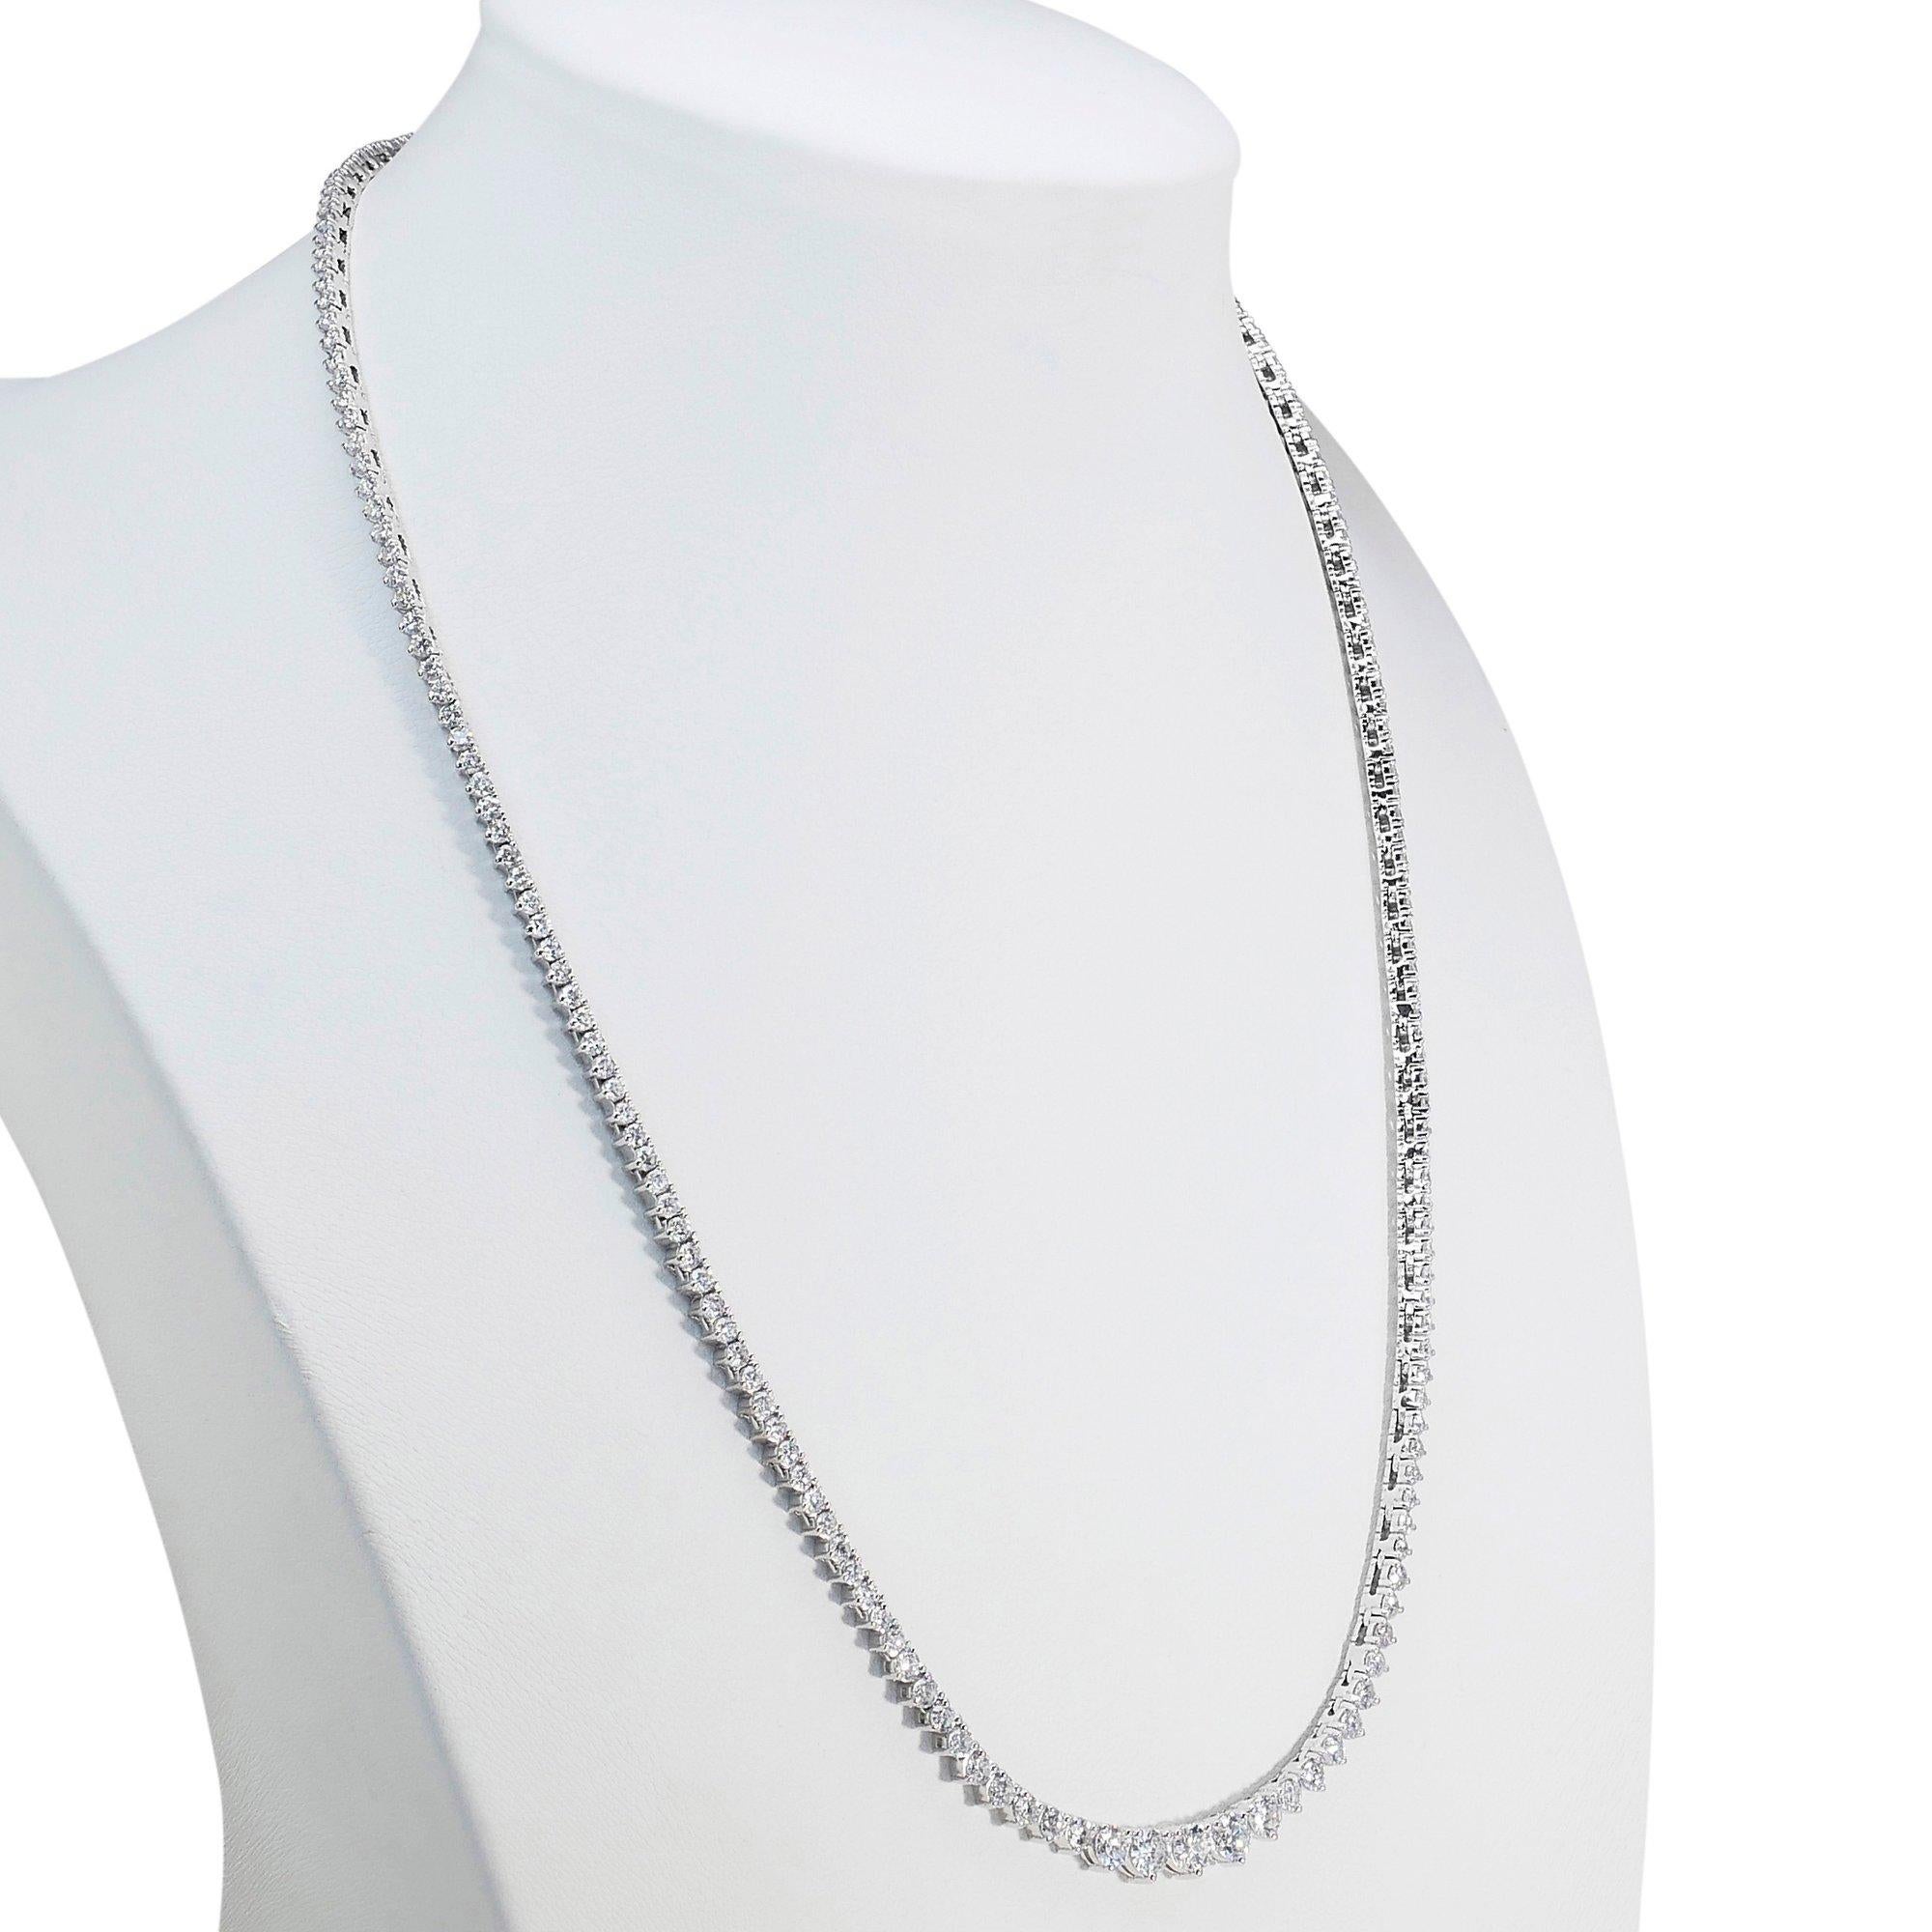 Women's Ravishing 18k White Gold Necklace w/ 5.78 ct Natural Diamonds IGI Certificate For Sale